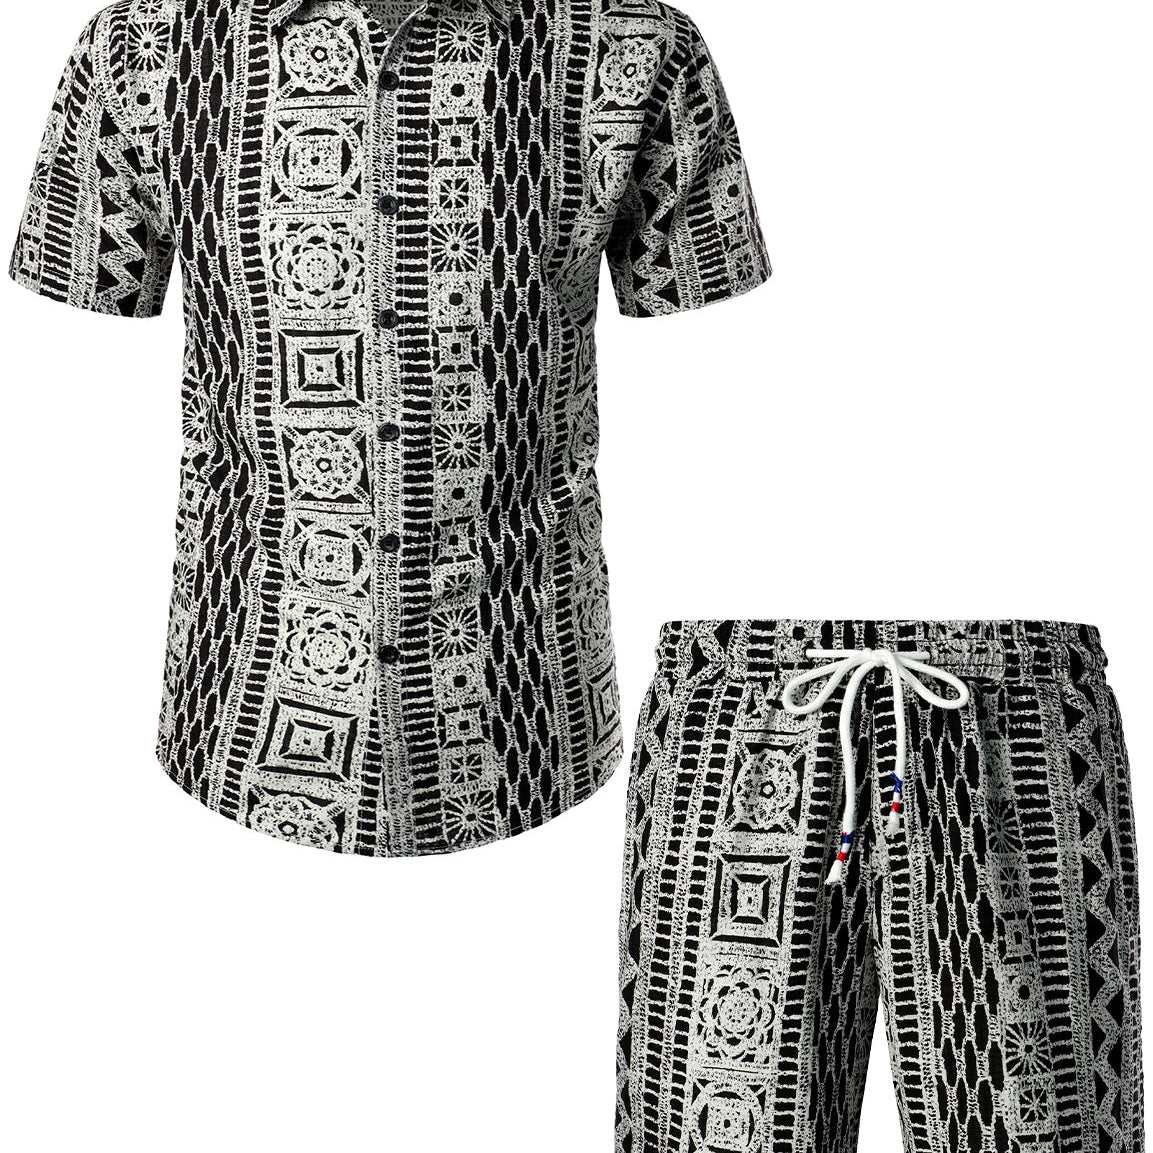 Men's Casual Vintage Boho Shirt & Shorts Set